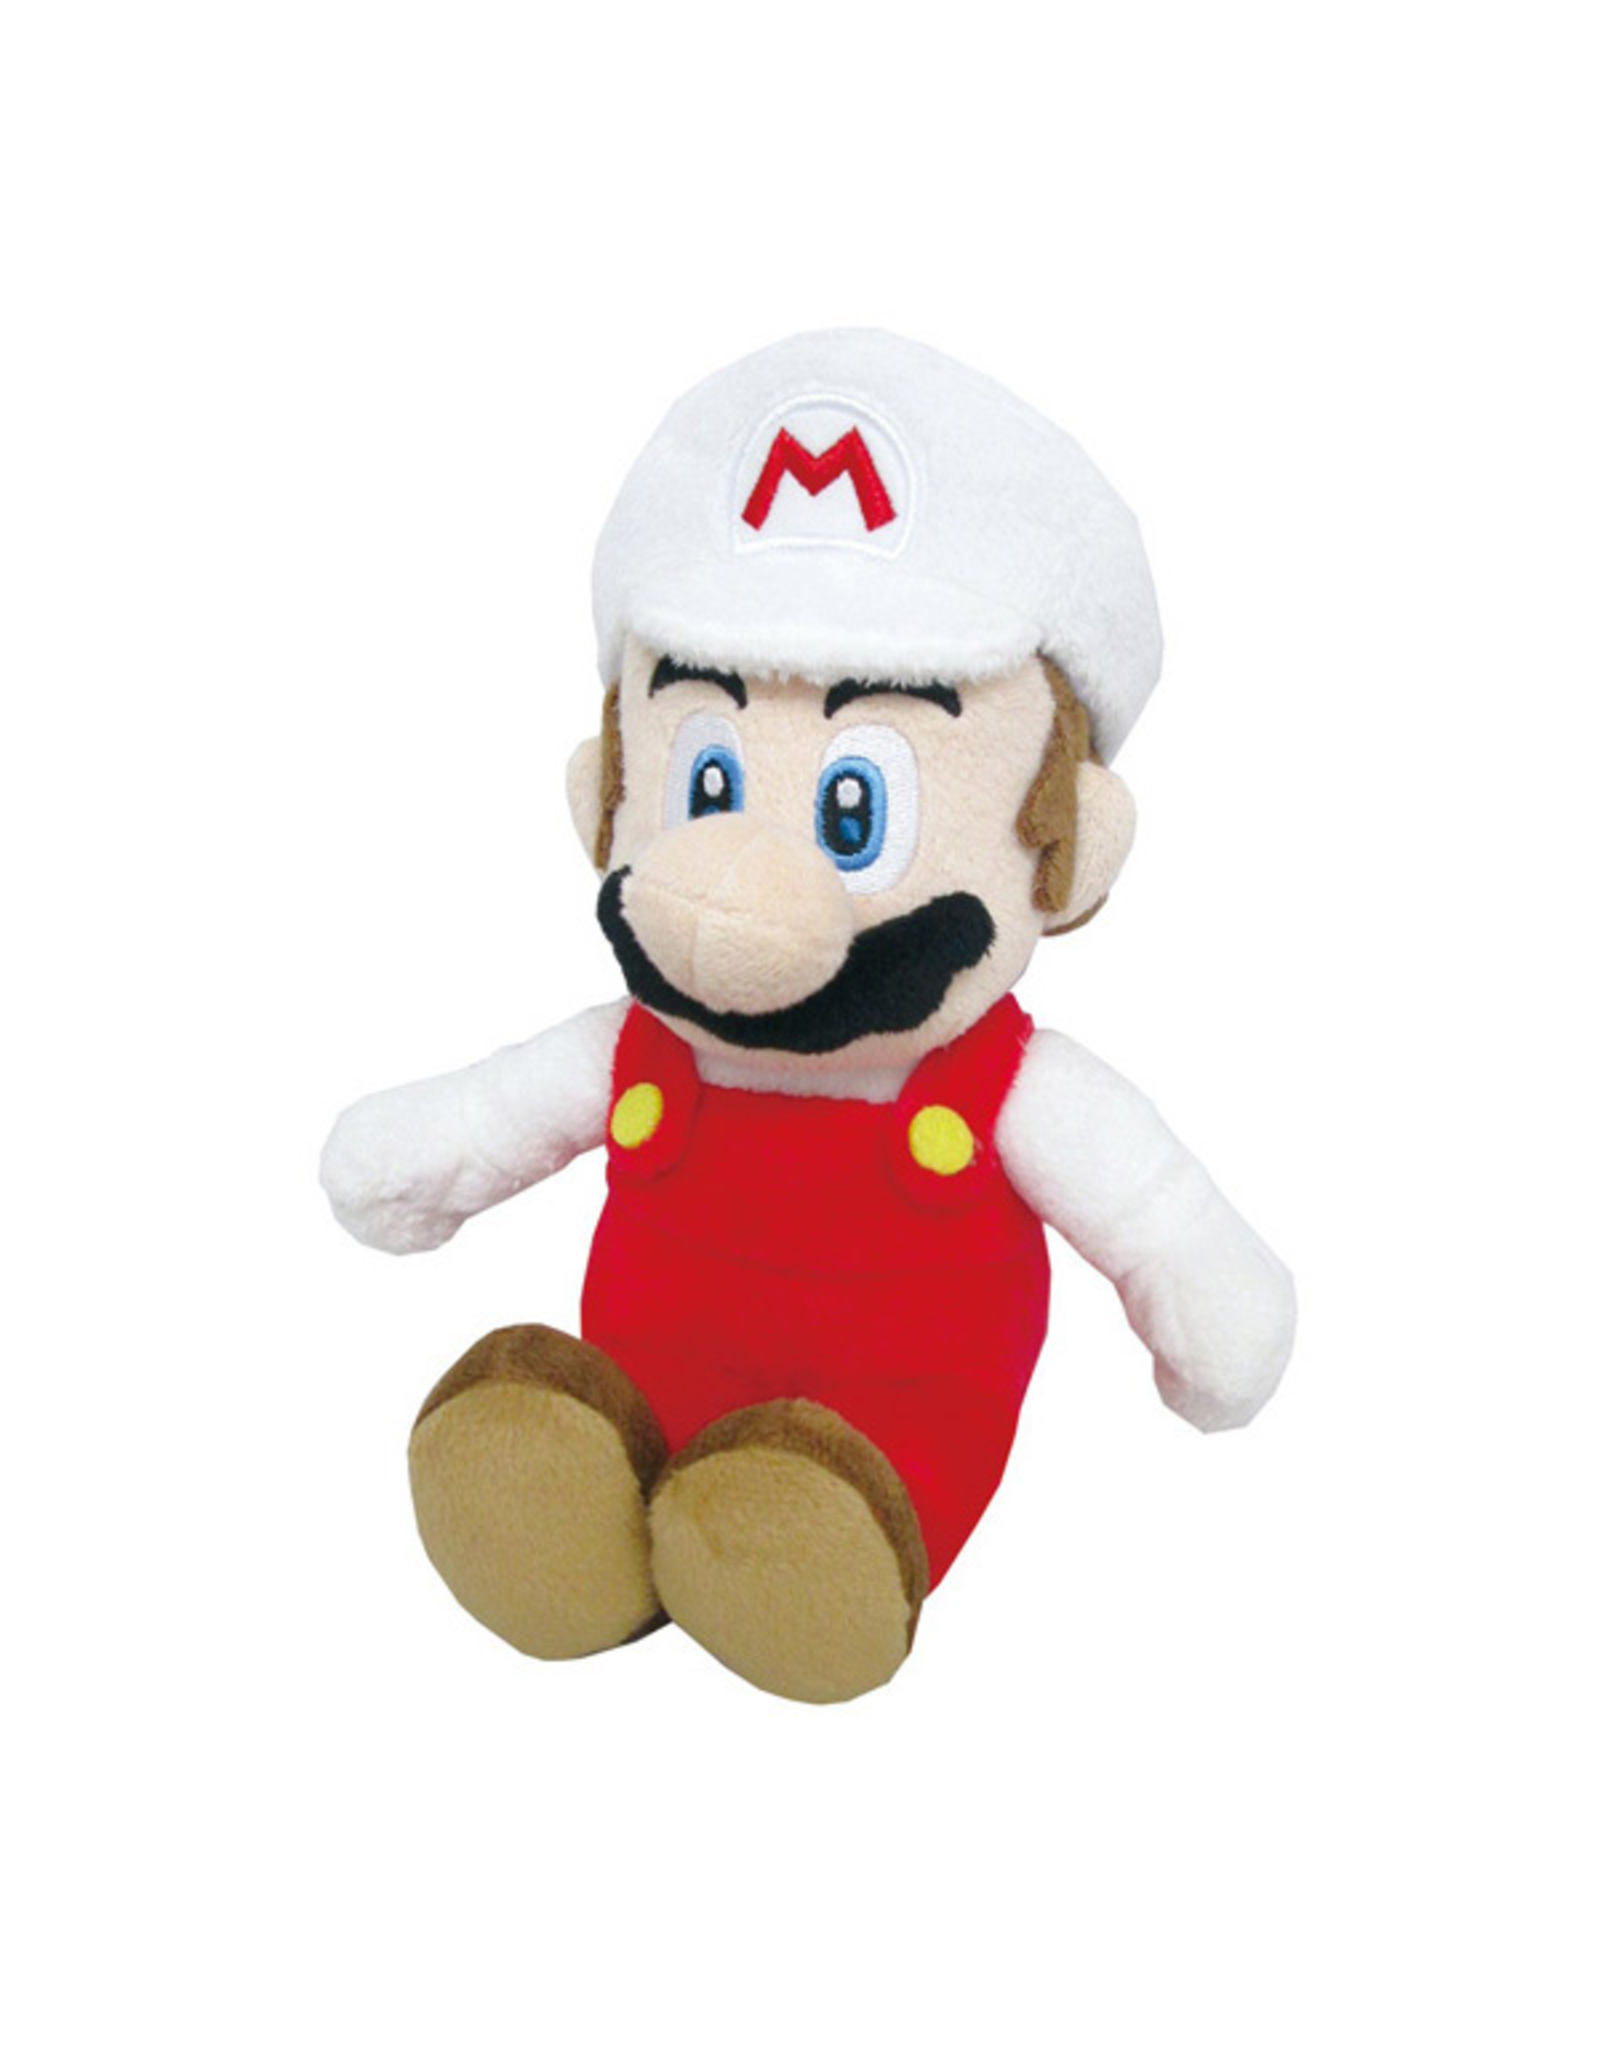 Little Buddy Little Buddy - Super Mario Bros - Fire Mario - 10" Plush